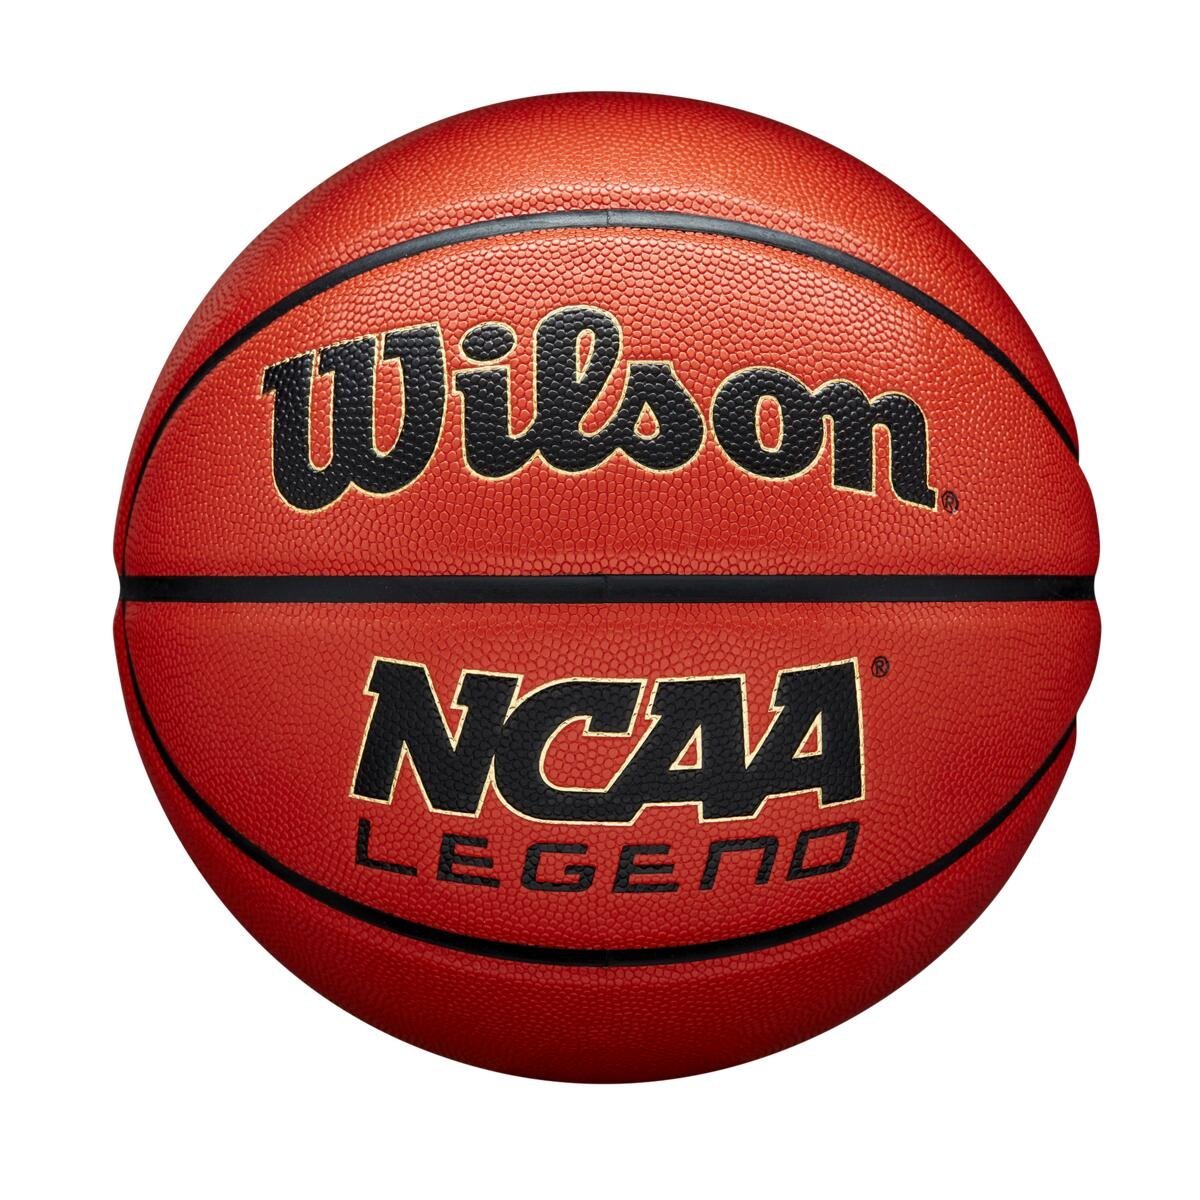 Lopta Wilson NCAA Legend Bskt - oranžová